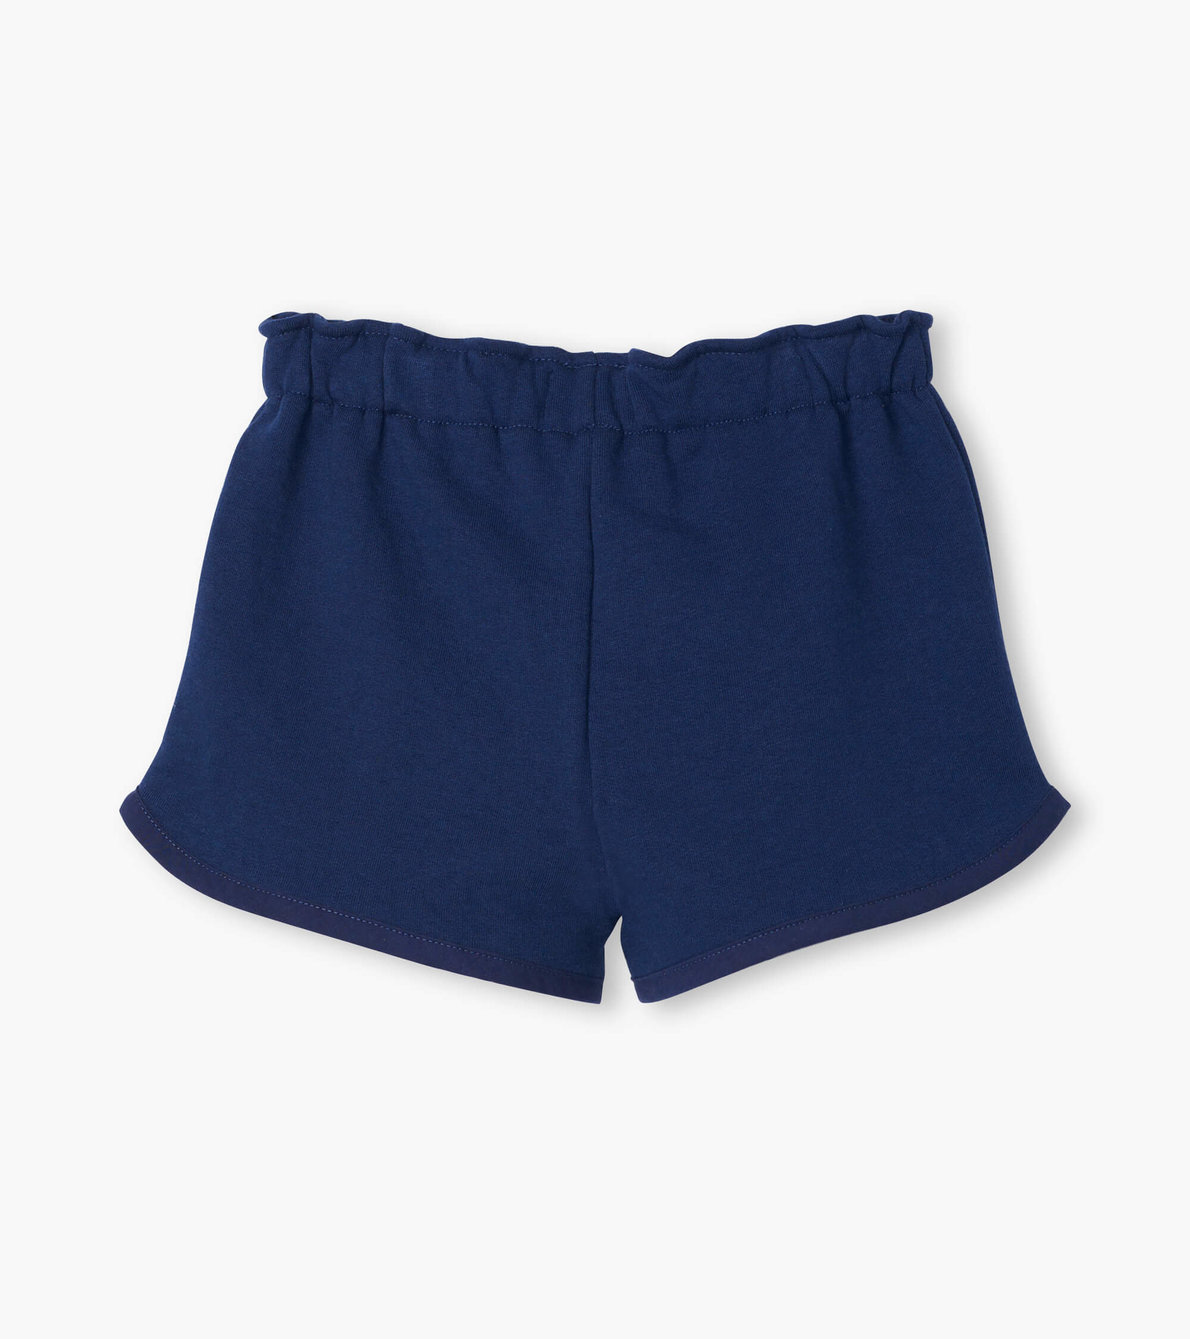 View larger image of Girls Blue Paper Bag Shorts